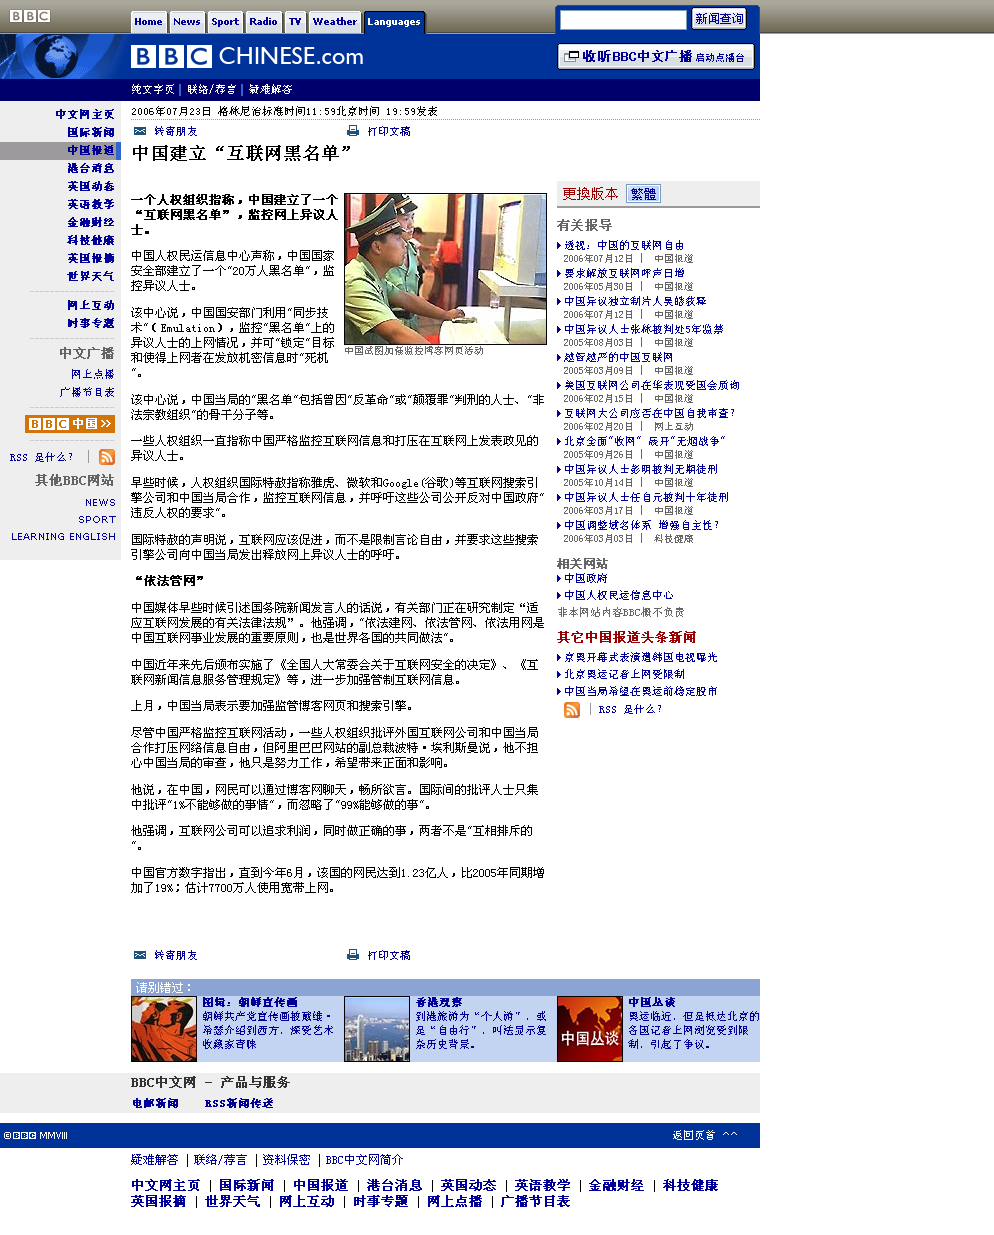 BBC 中文网  中国报道  中国建立“互联网黑名单”.png